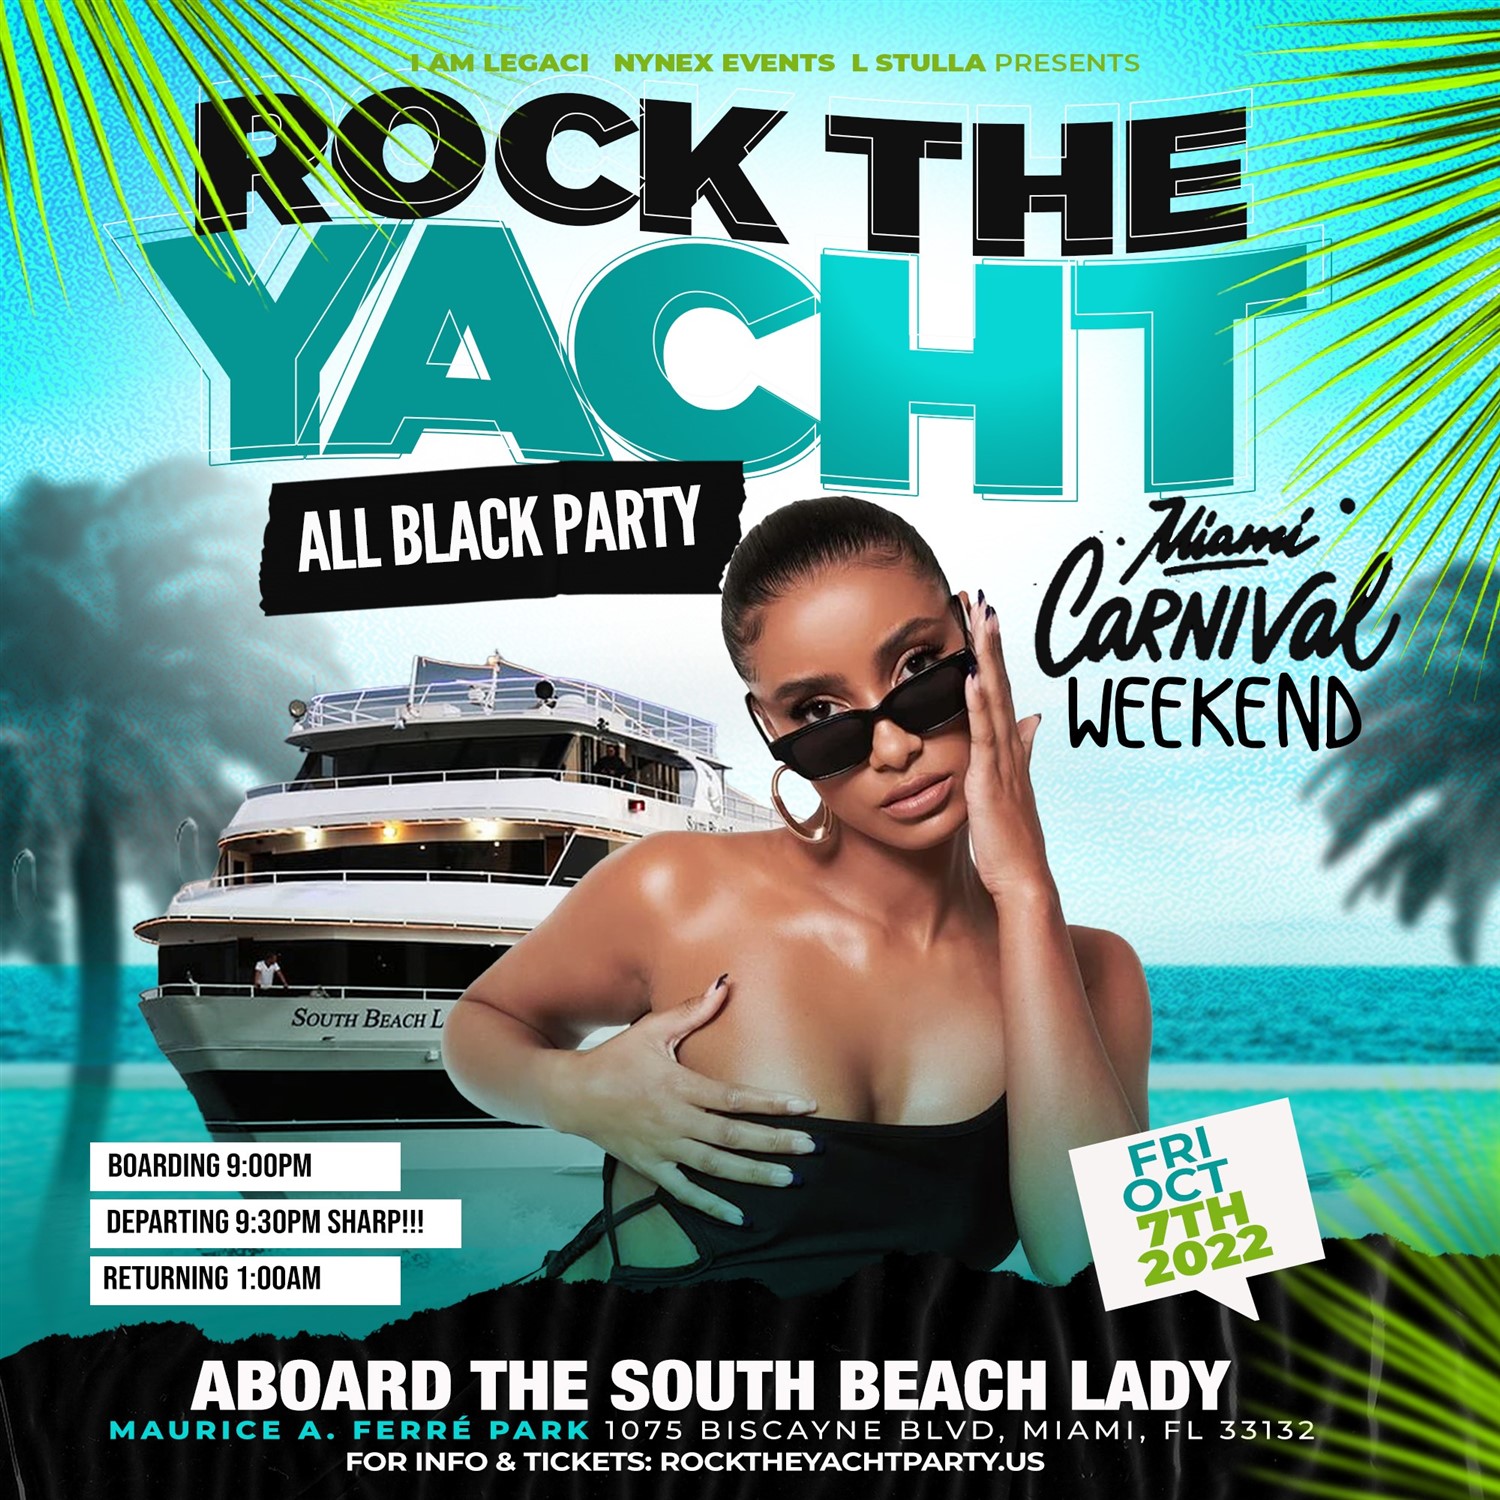 ROCK THE YACHT 2022 ANNUAL ALL BLACK YACHT PARTY MIAMI CARNIVAL  on oct. 07, 21:00@South Beach Lady - Compra entradas y obtén información enwww.fetefinders.com tickets.fetefinders.com